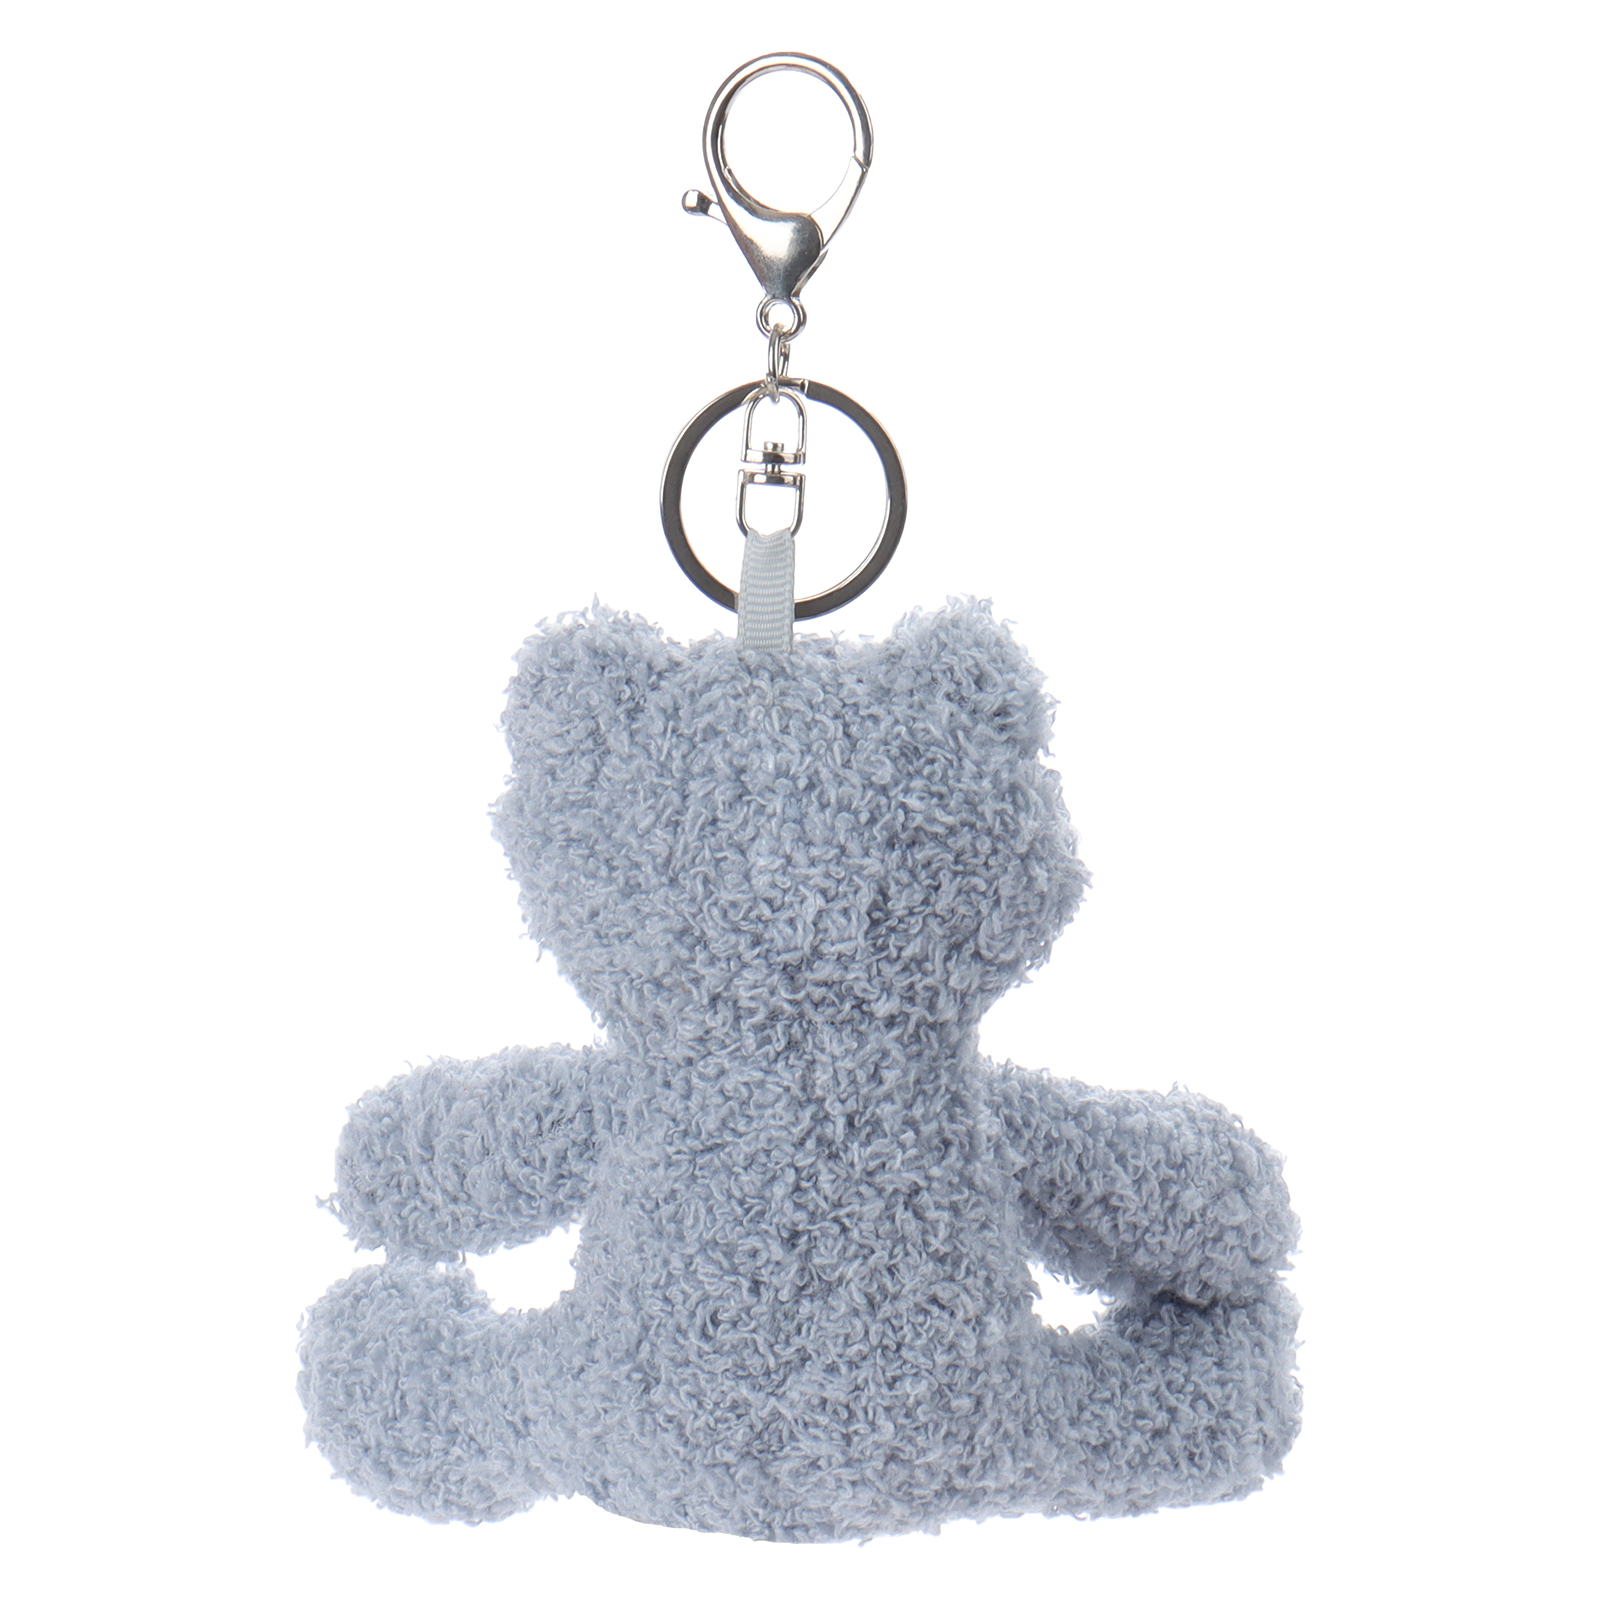 Apricot Lamb Velvet Frog Keychain-Blue Stuffed Animal Soft Plush Keychain